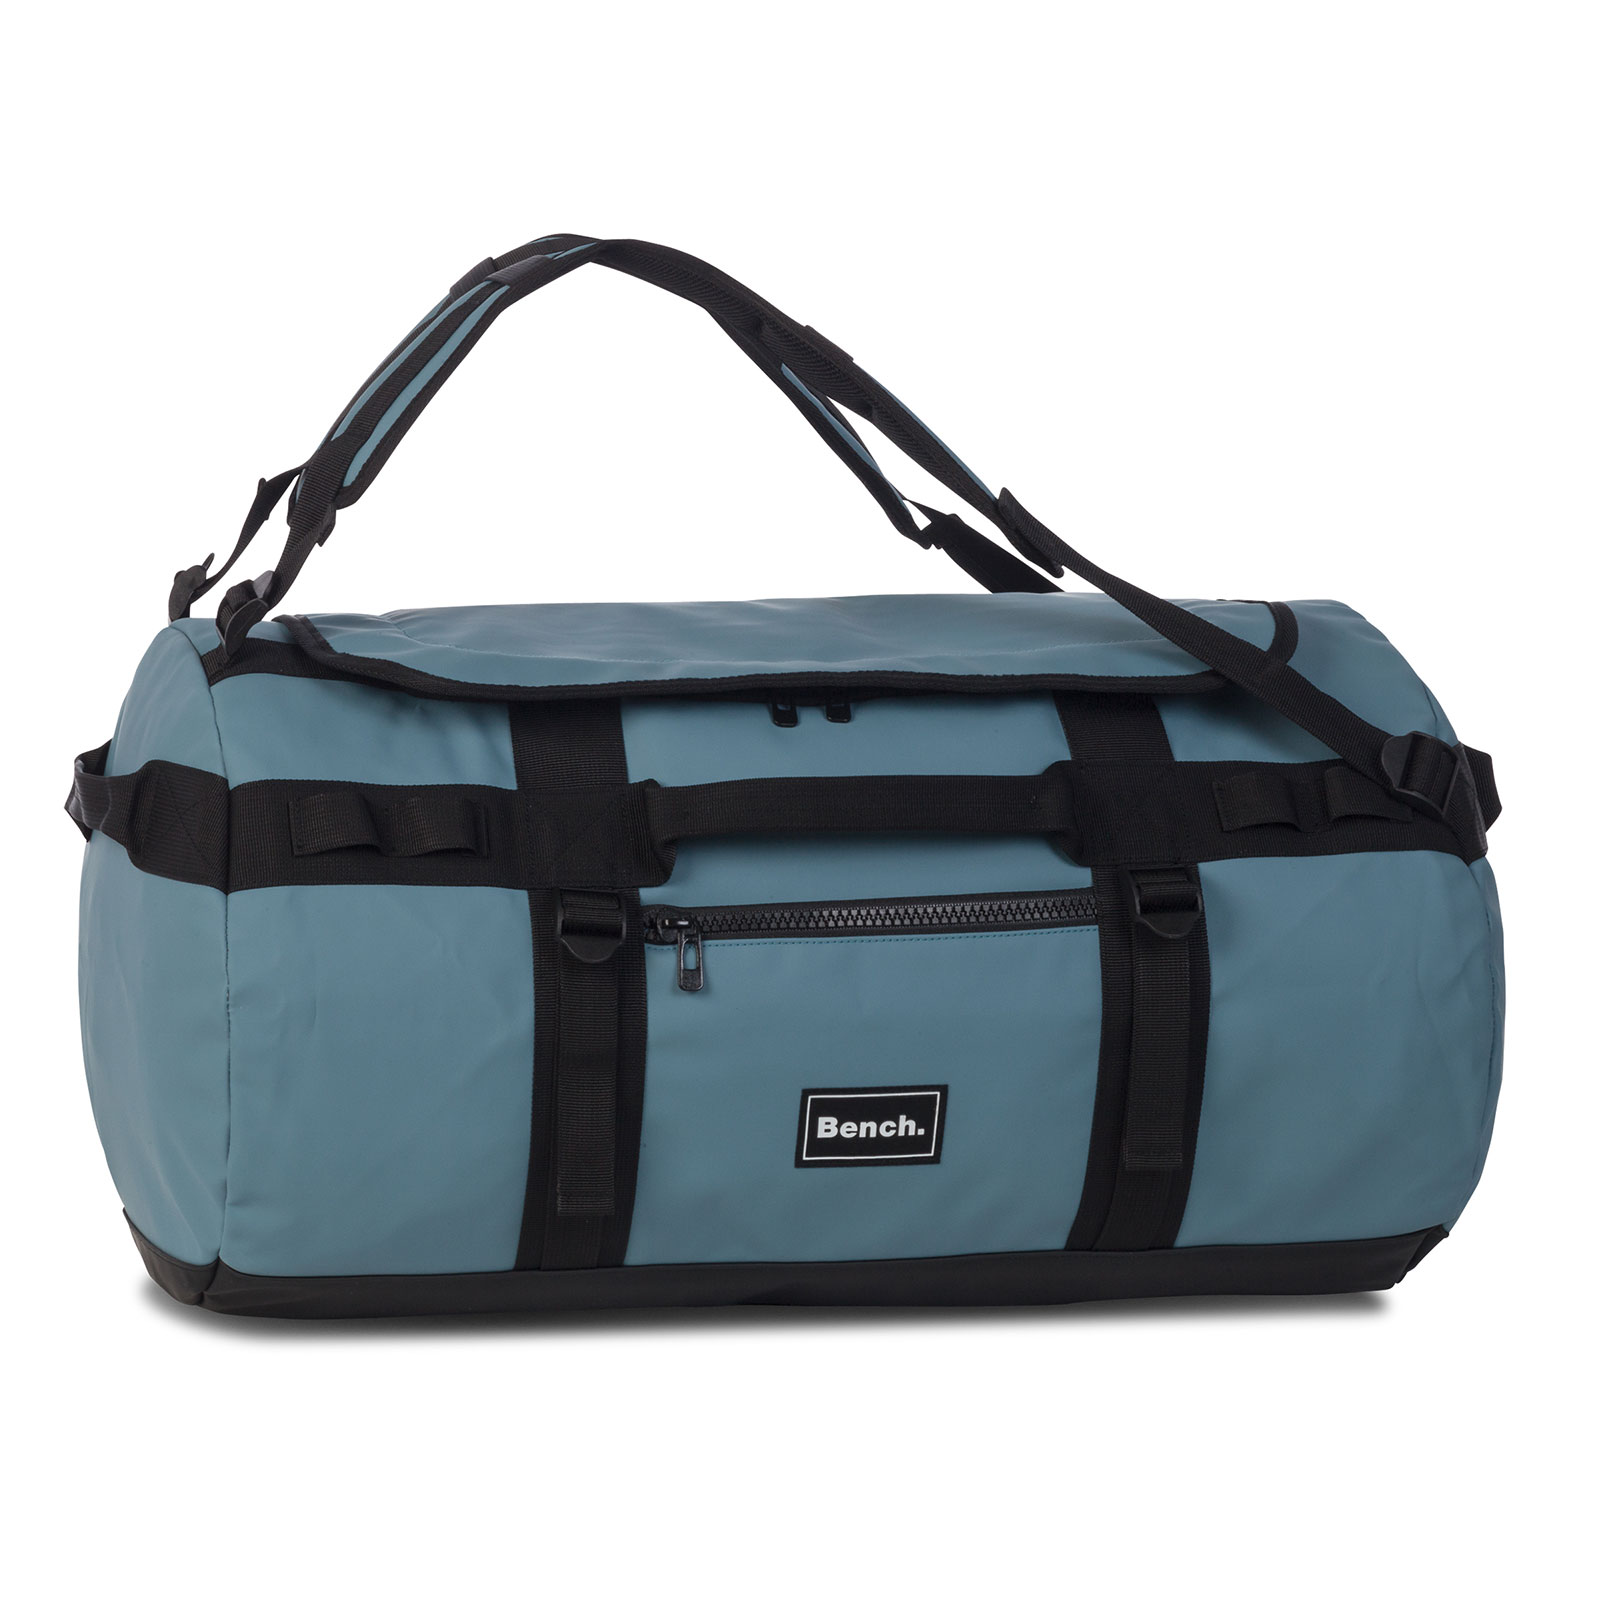 Bench Hydro Duffle Bag Tasche 55 cm, Blau